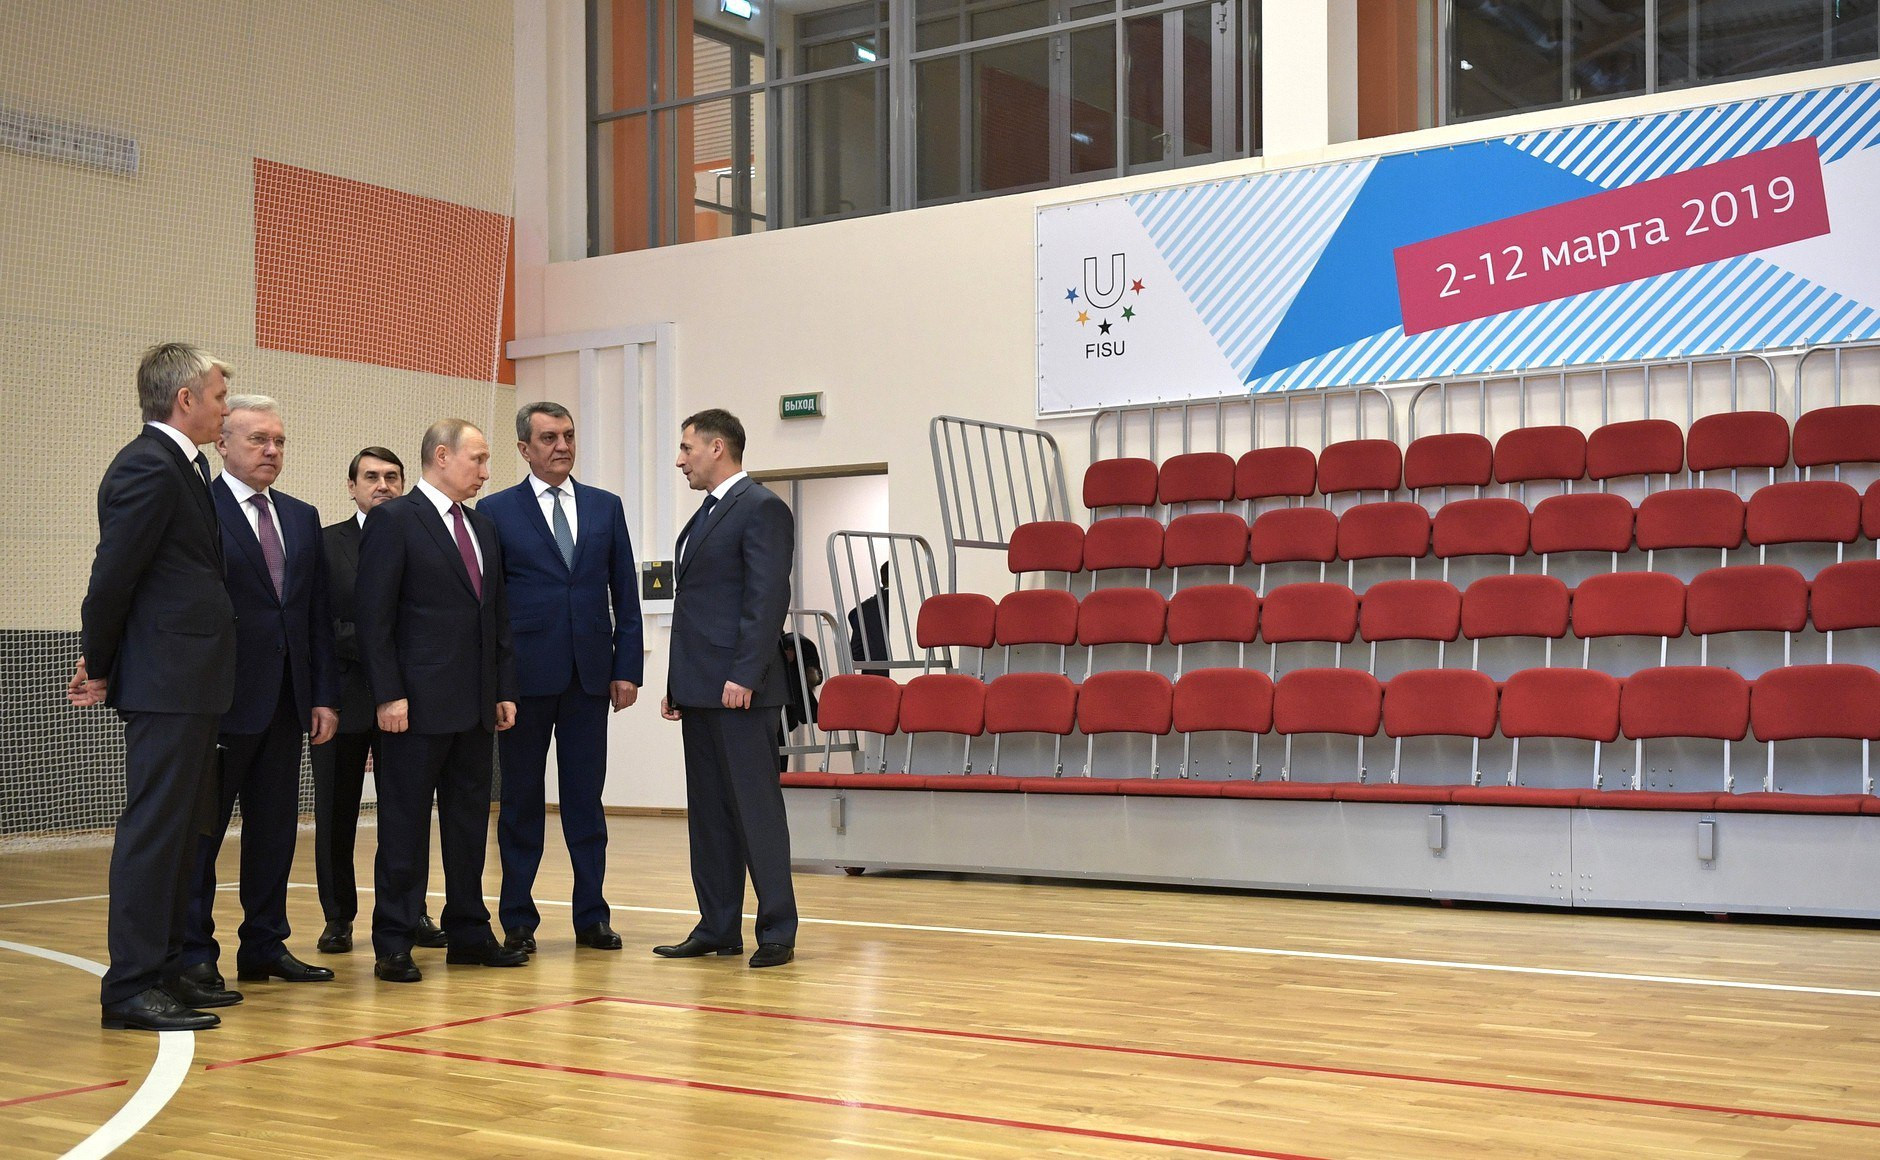 Russian President Vladimir Putin said he was impressed with the venue during a recent visit ©Krasnoyarsk 2019